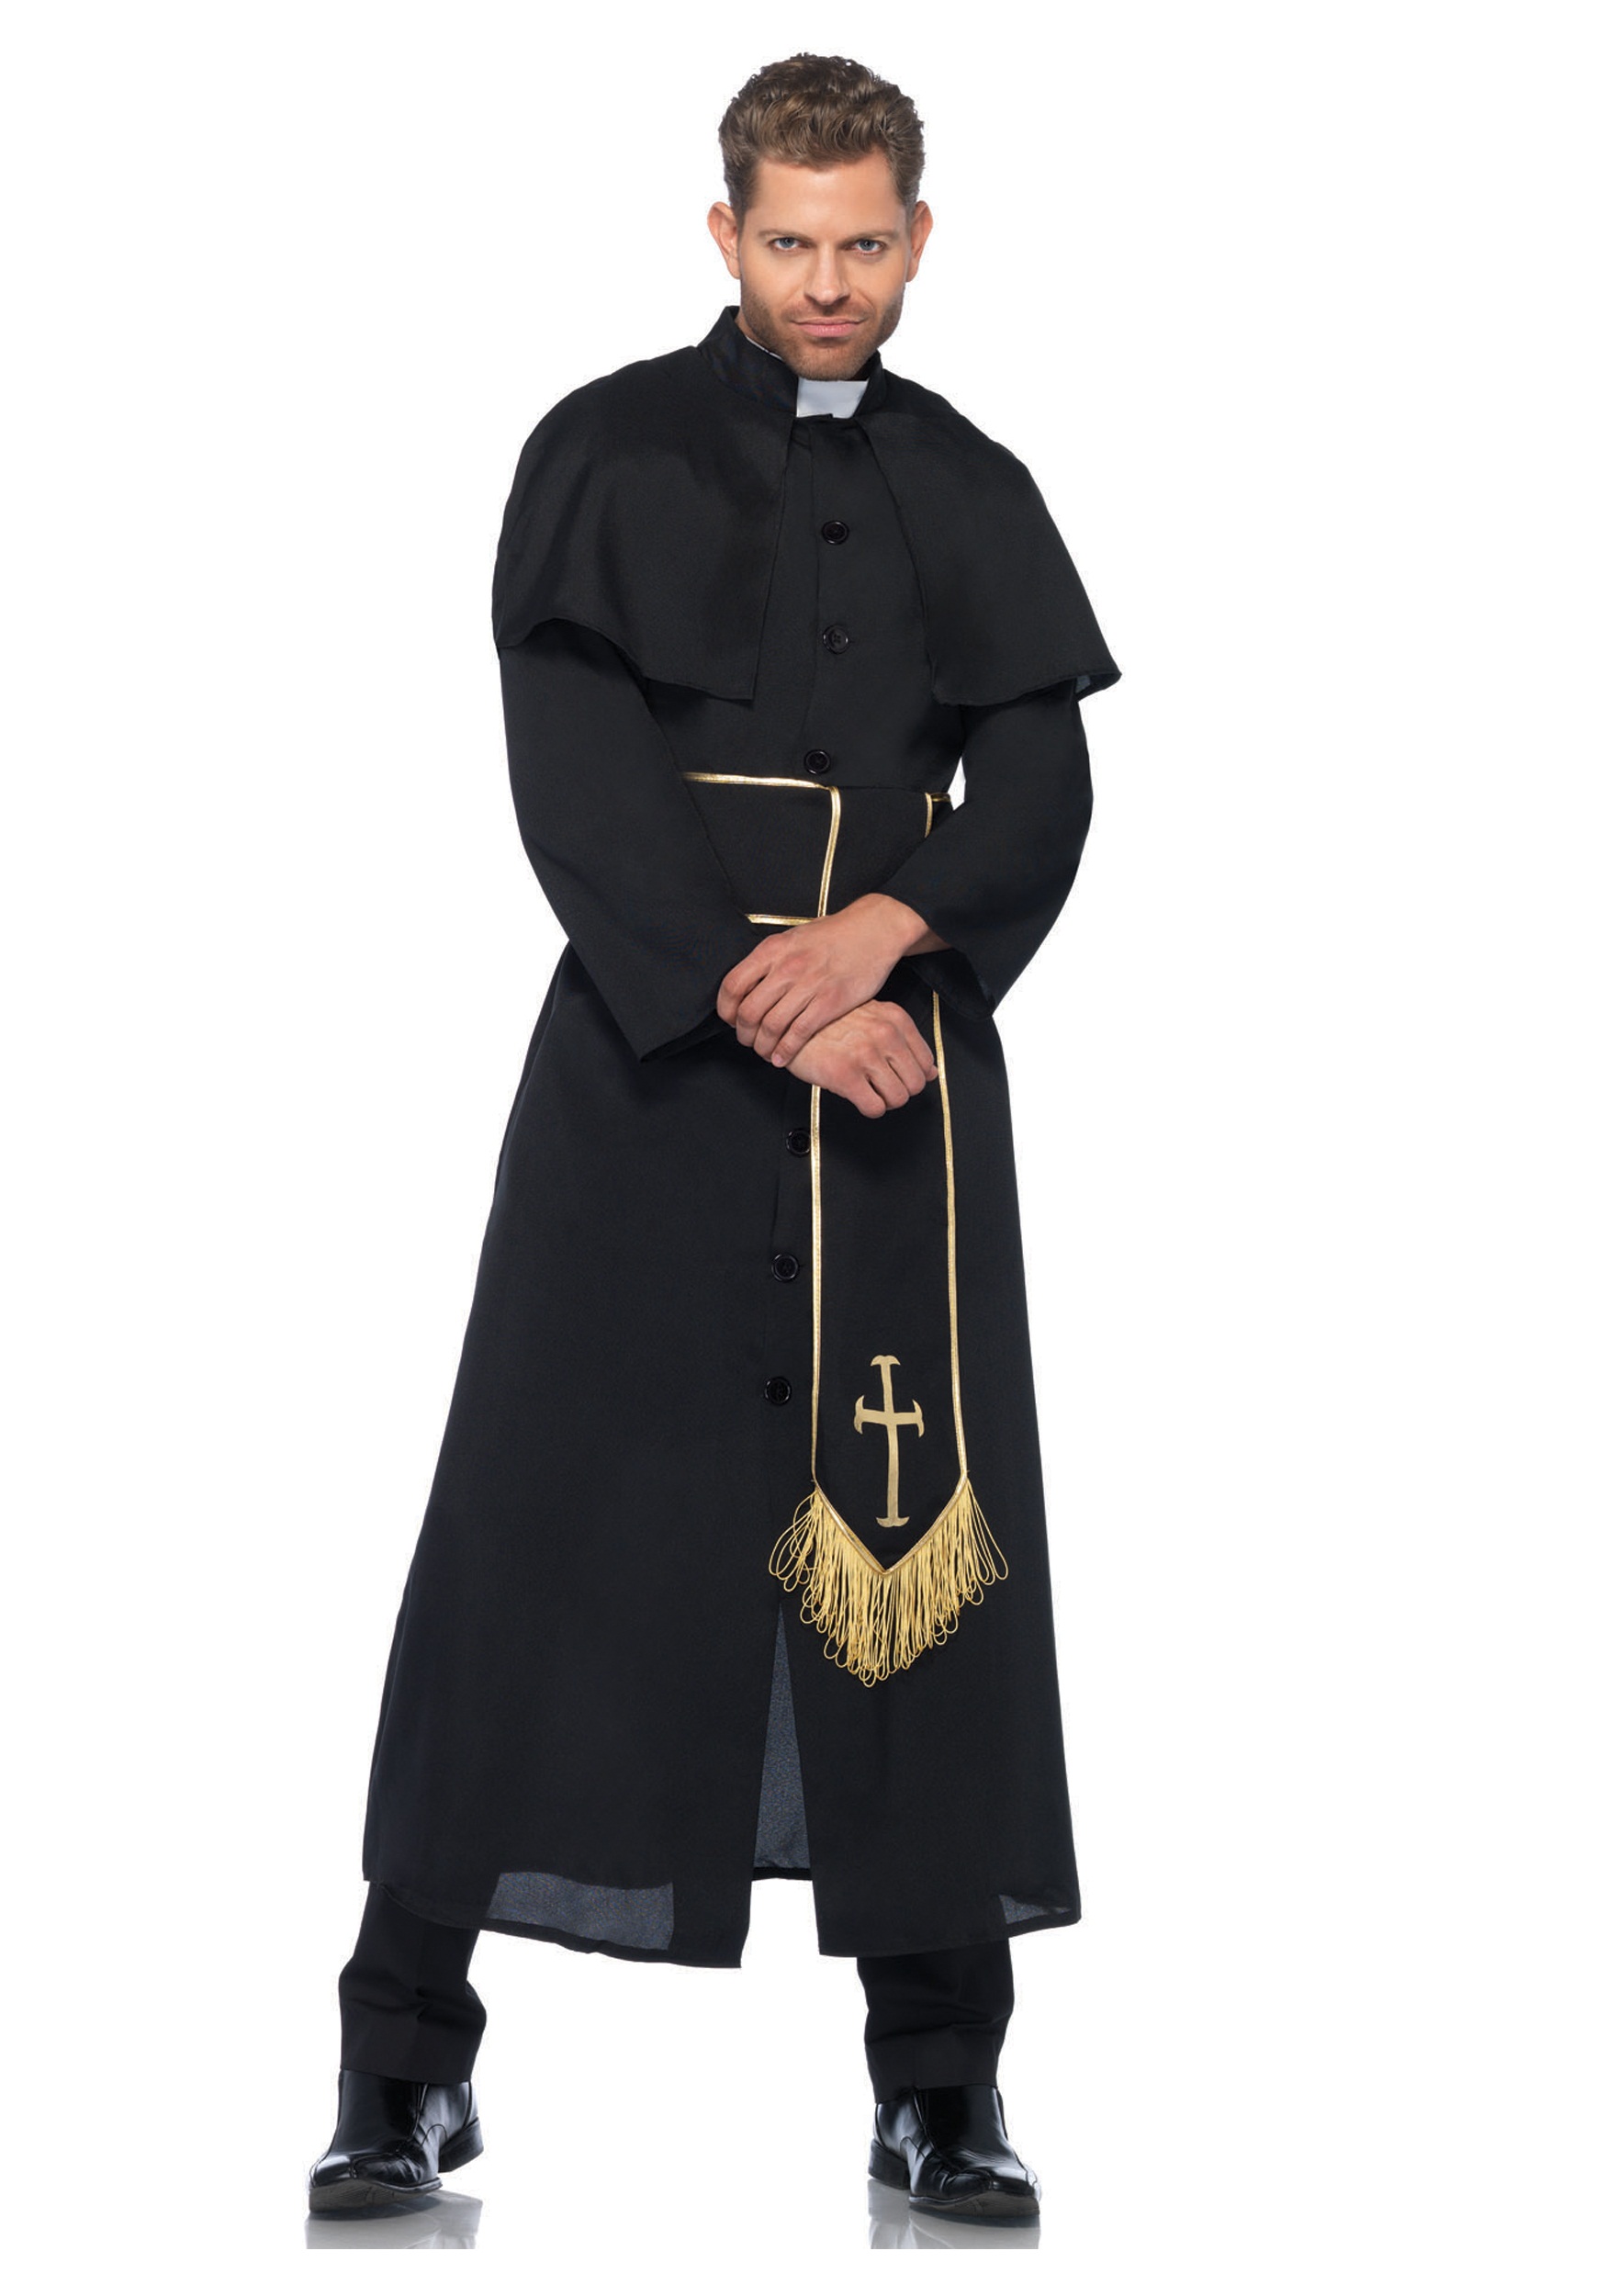 Image of Priest Adult Men's Costume ID LE85334-M/L